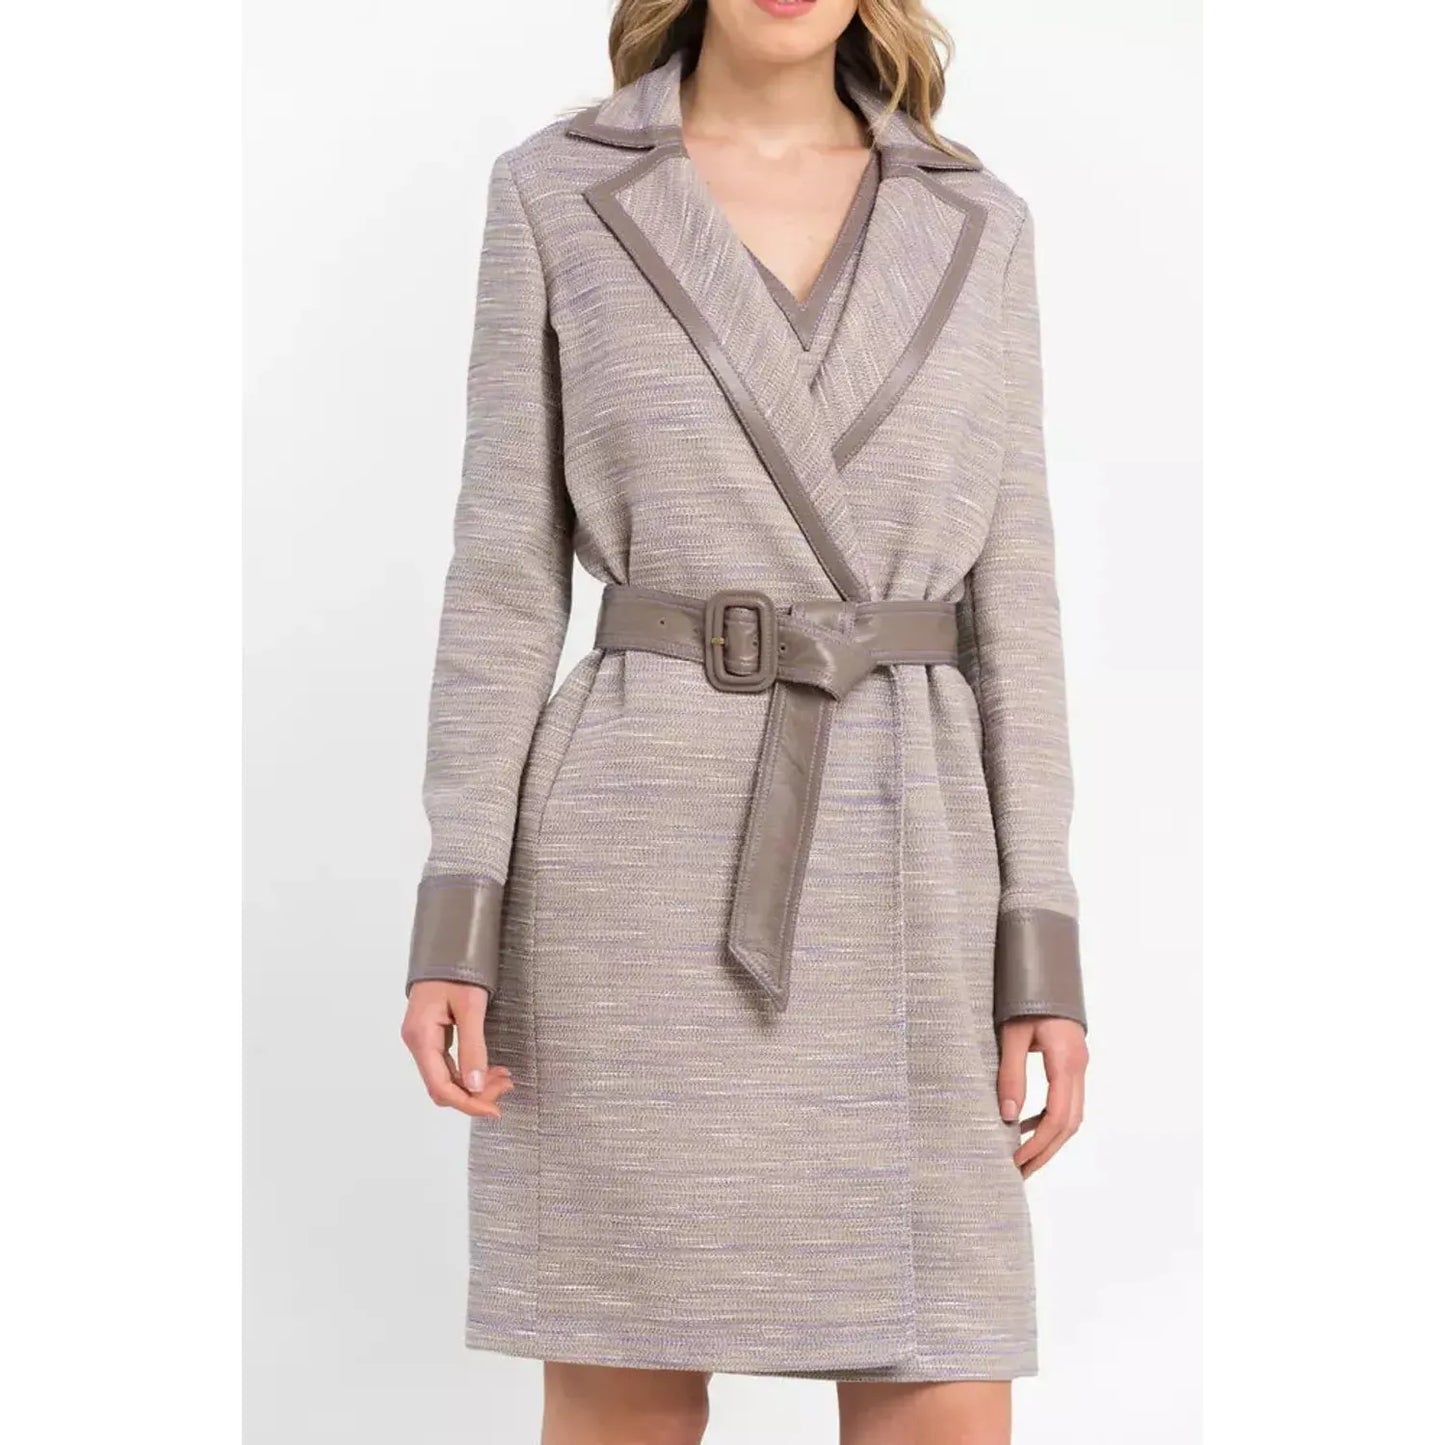 Trussardi Chic Beige Cotton Kimono Coat with Contrasting Accents Dress b-camel-jackets-coat